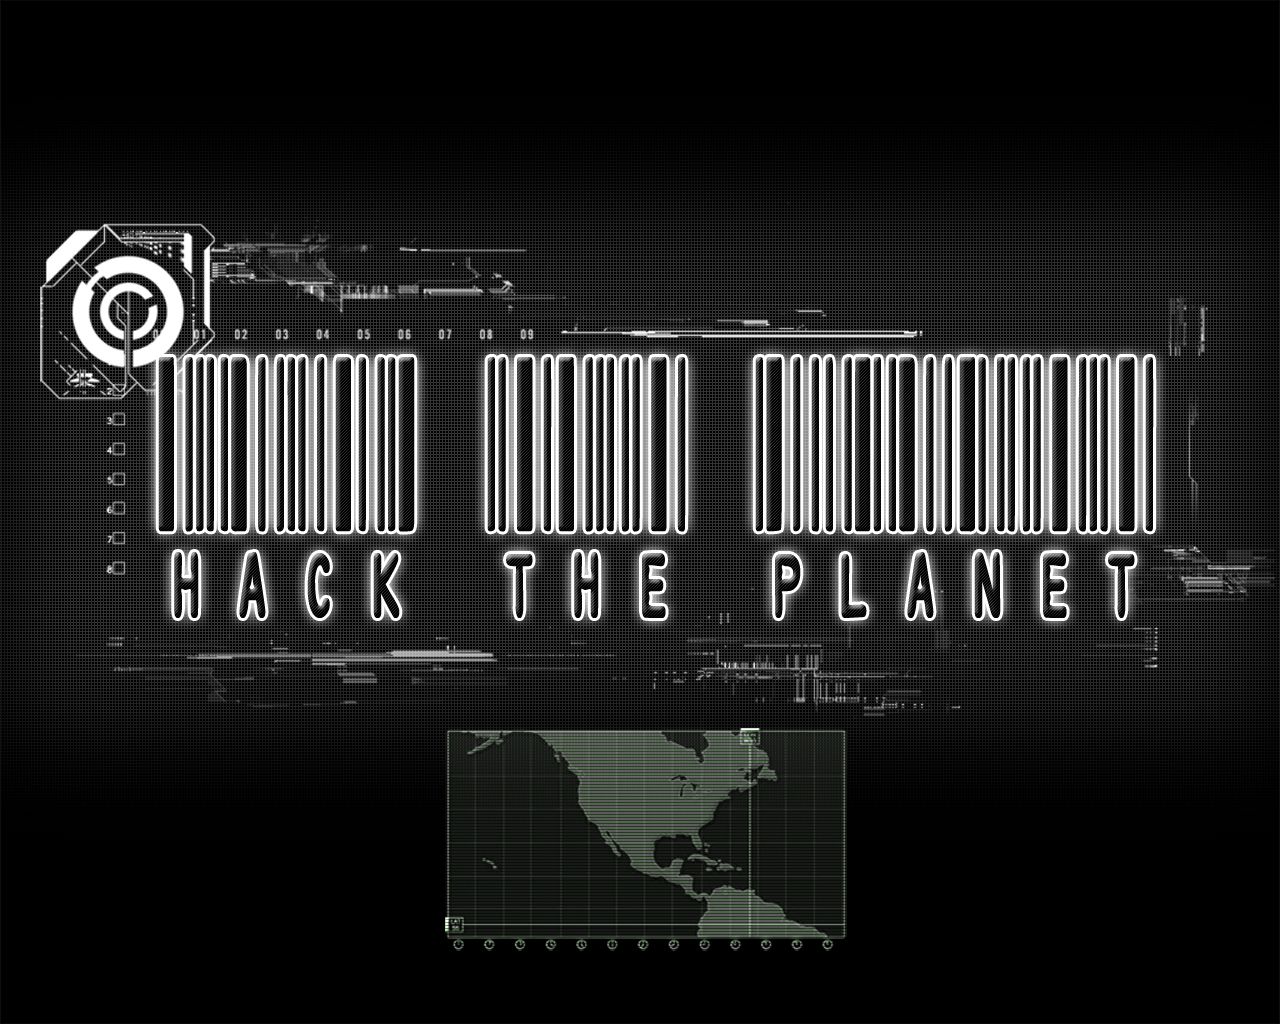 Hack the Planet Wallpaper. Emoji Planet Wallpaper, BlackPlanet Wallpaper and Planet Wallpaper